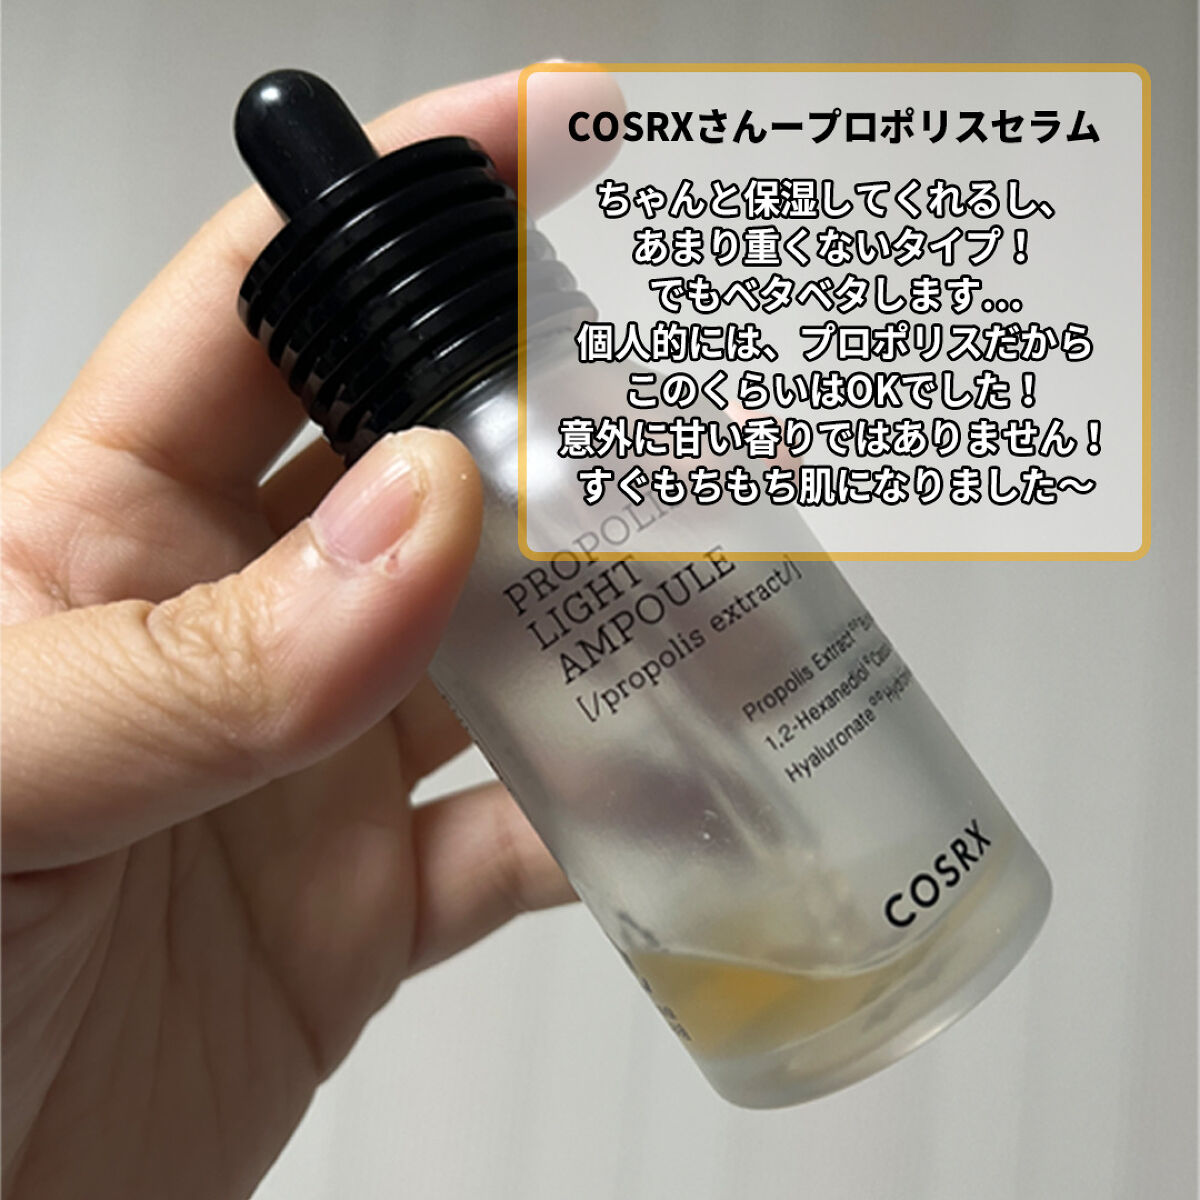 SOME BY MI・Dermatory・COSRX・Huxleyのスキンケア・基礎化粧品を使った口コミ  -Tゾーンはオイリー、チークとUゾーンは乾燥しやすい by popos_memo(混合肌/30代前半) | LIPS